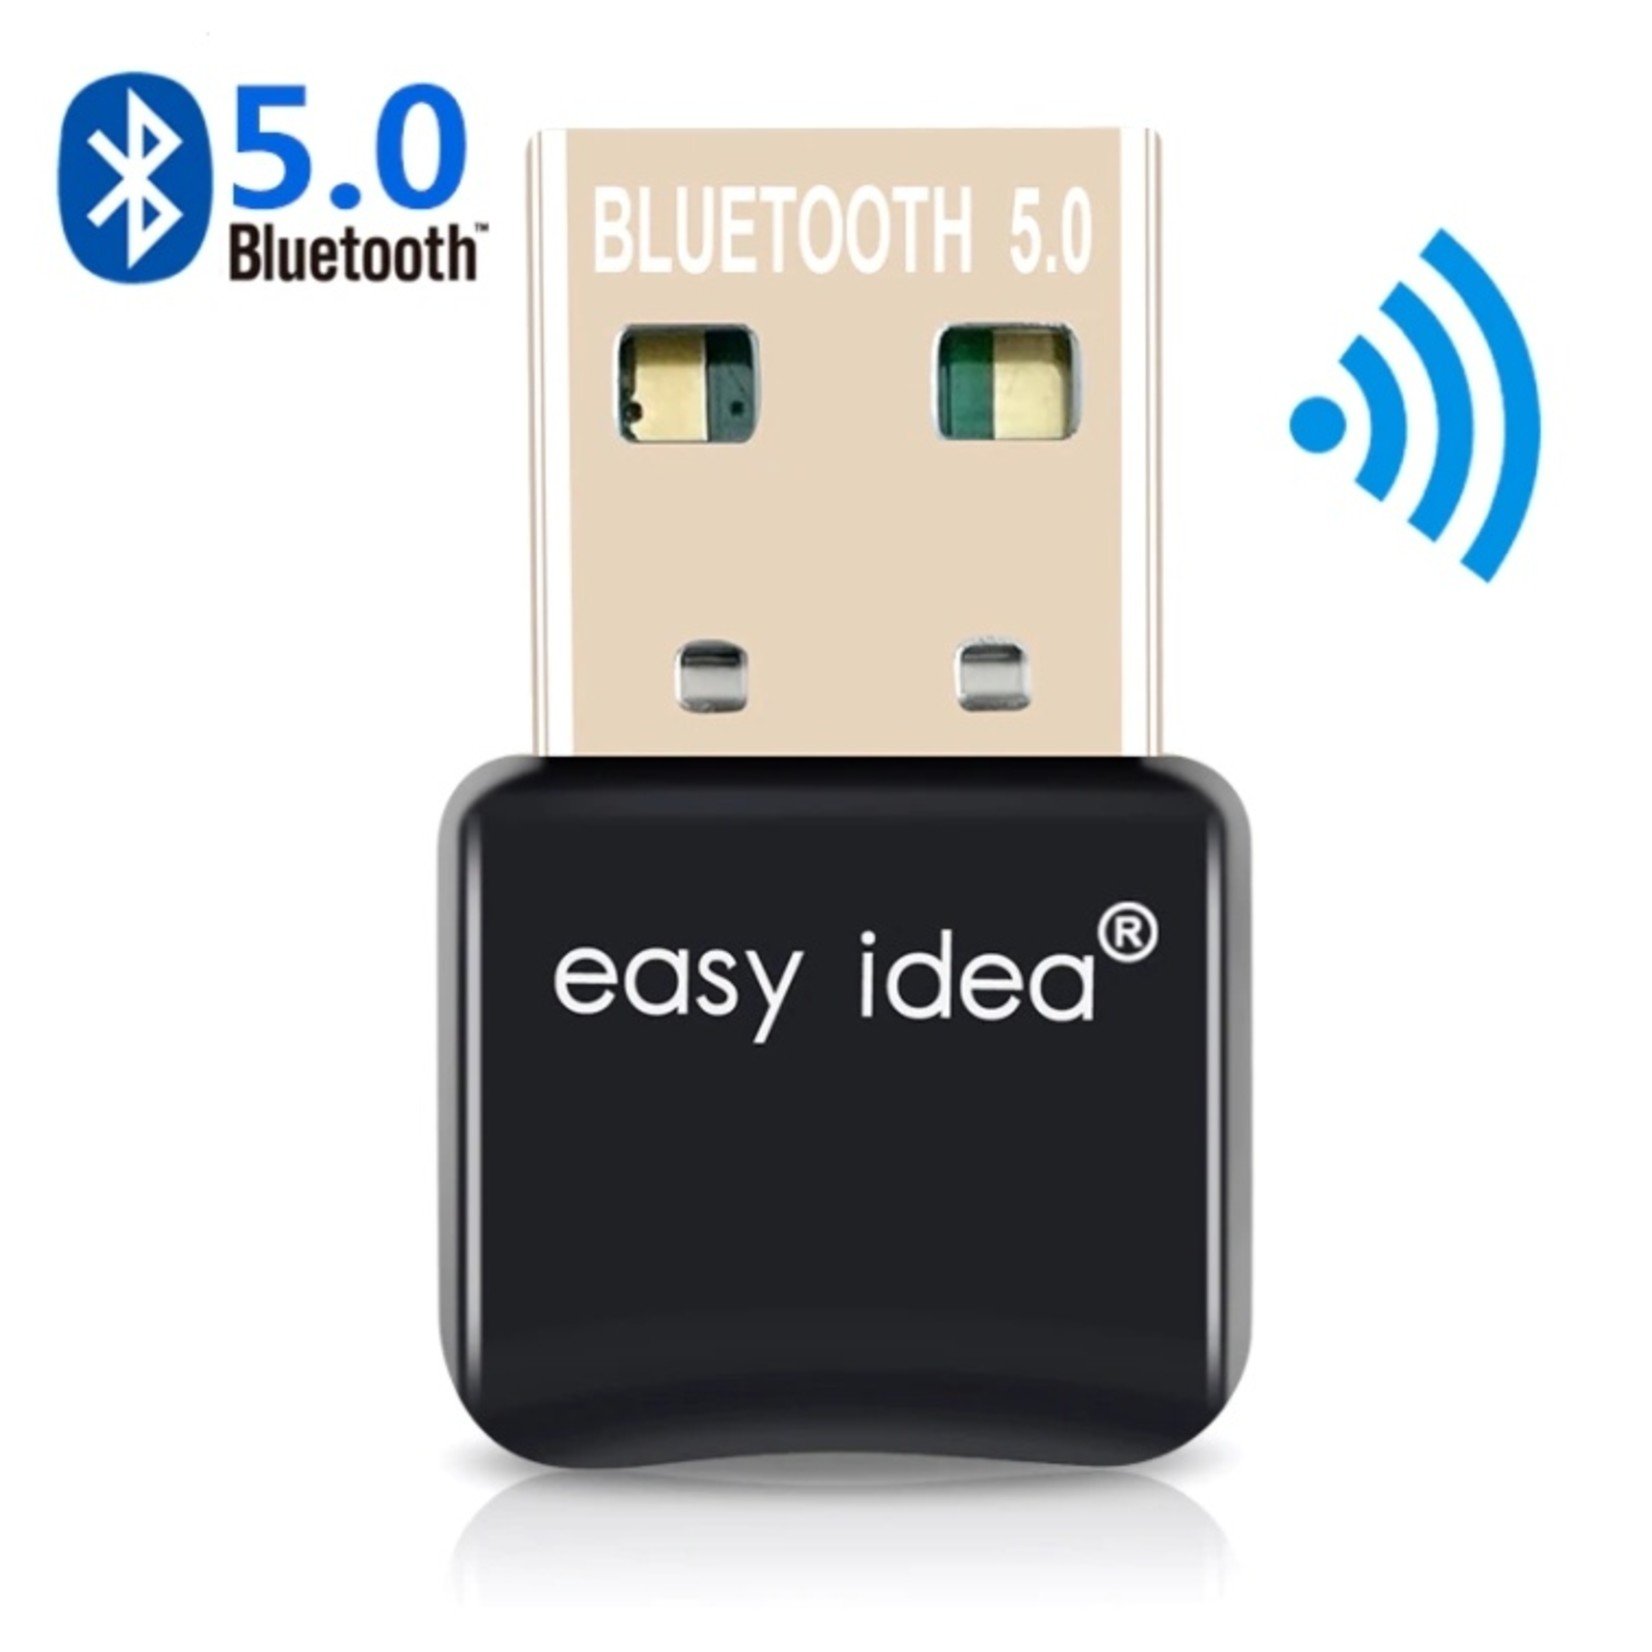 Bluetooth CSR 5.0 Dongle - Mini Bluetooth 5.0 USB Adapter – Dongle - Bluetooth adapter - draadloze dongle - verbind meerdere bluetooth apparaten